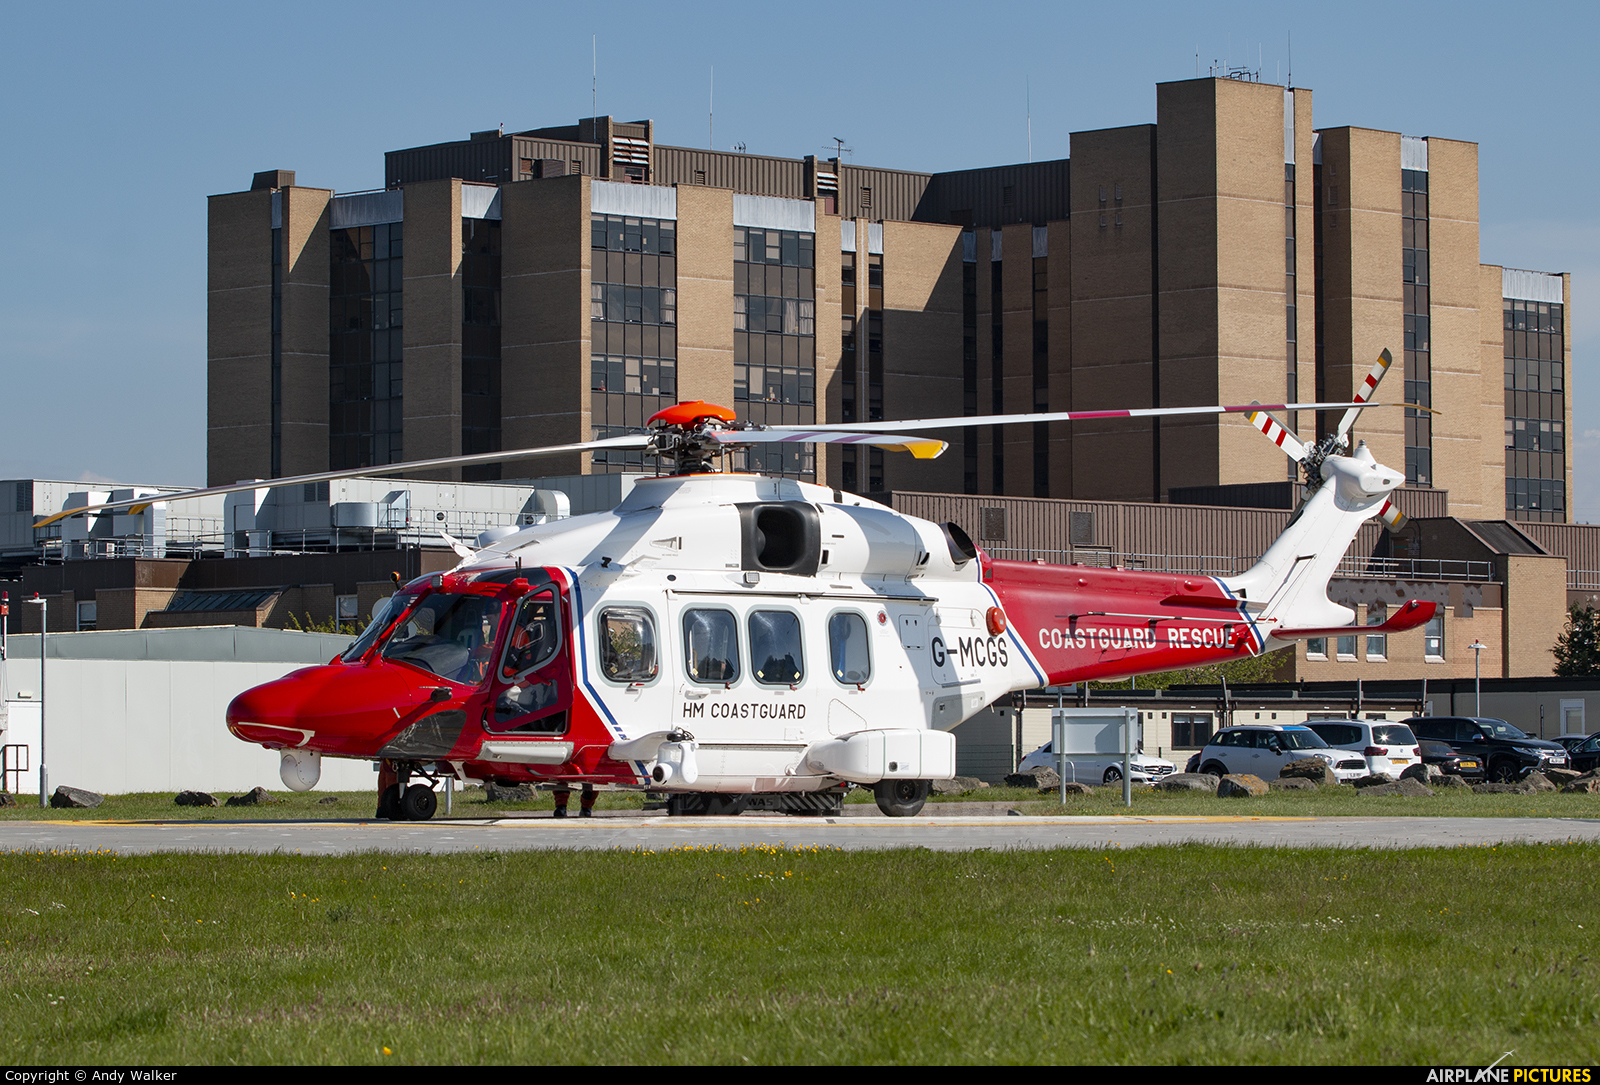 UK - Coastguard G-MCGS aircraft at Inverness Raigmore Hospital